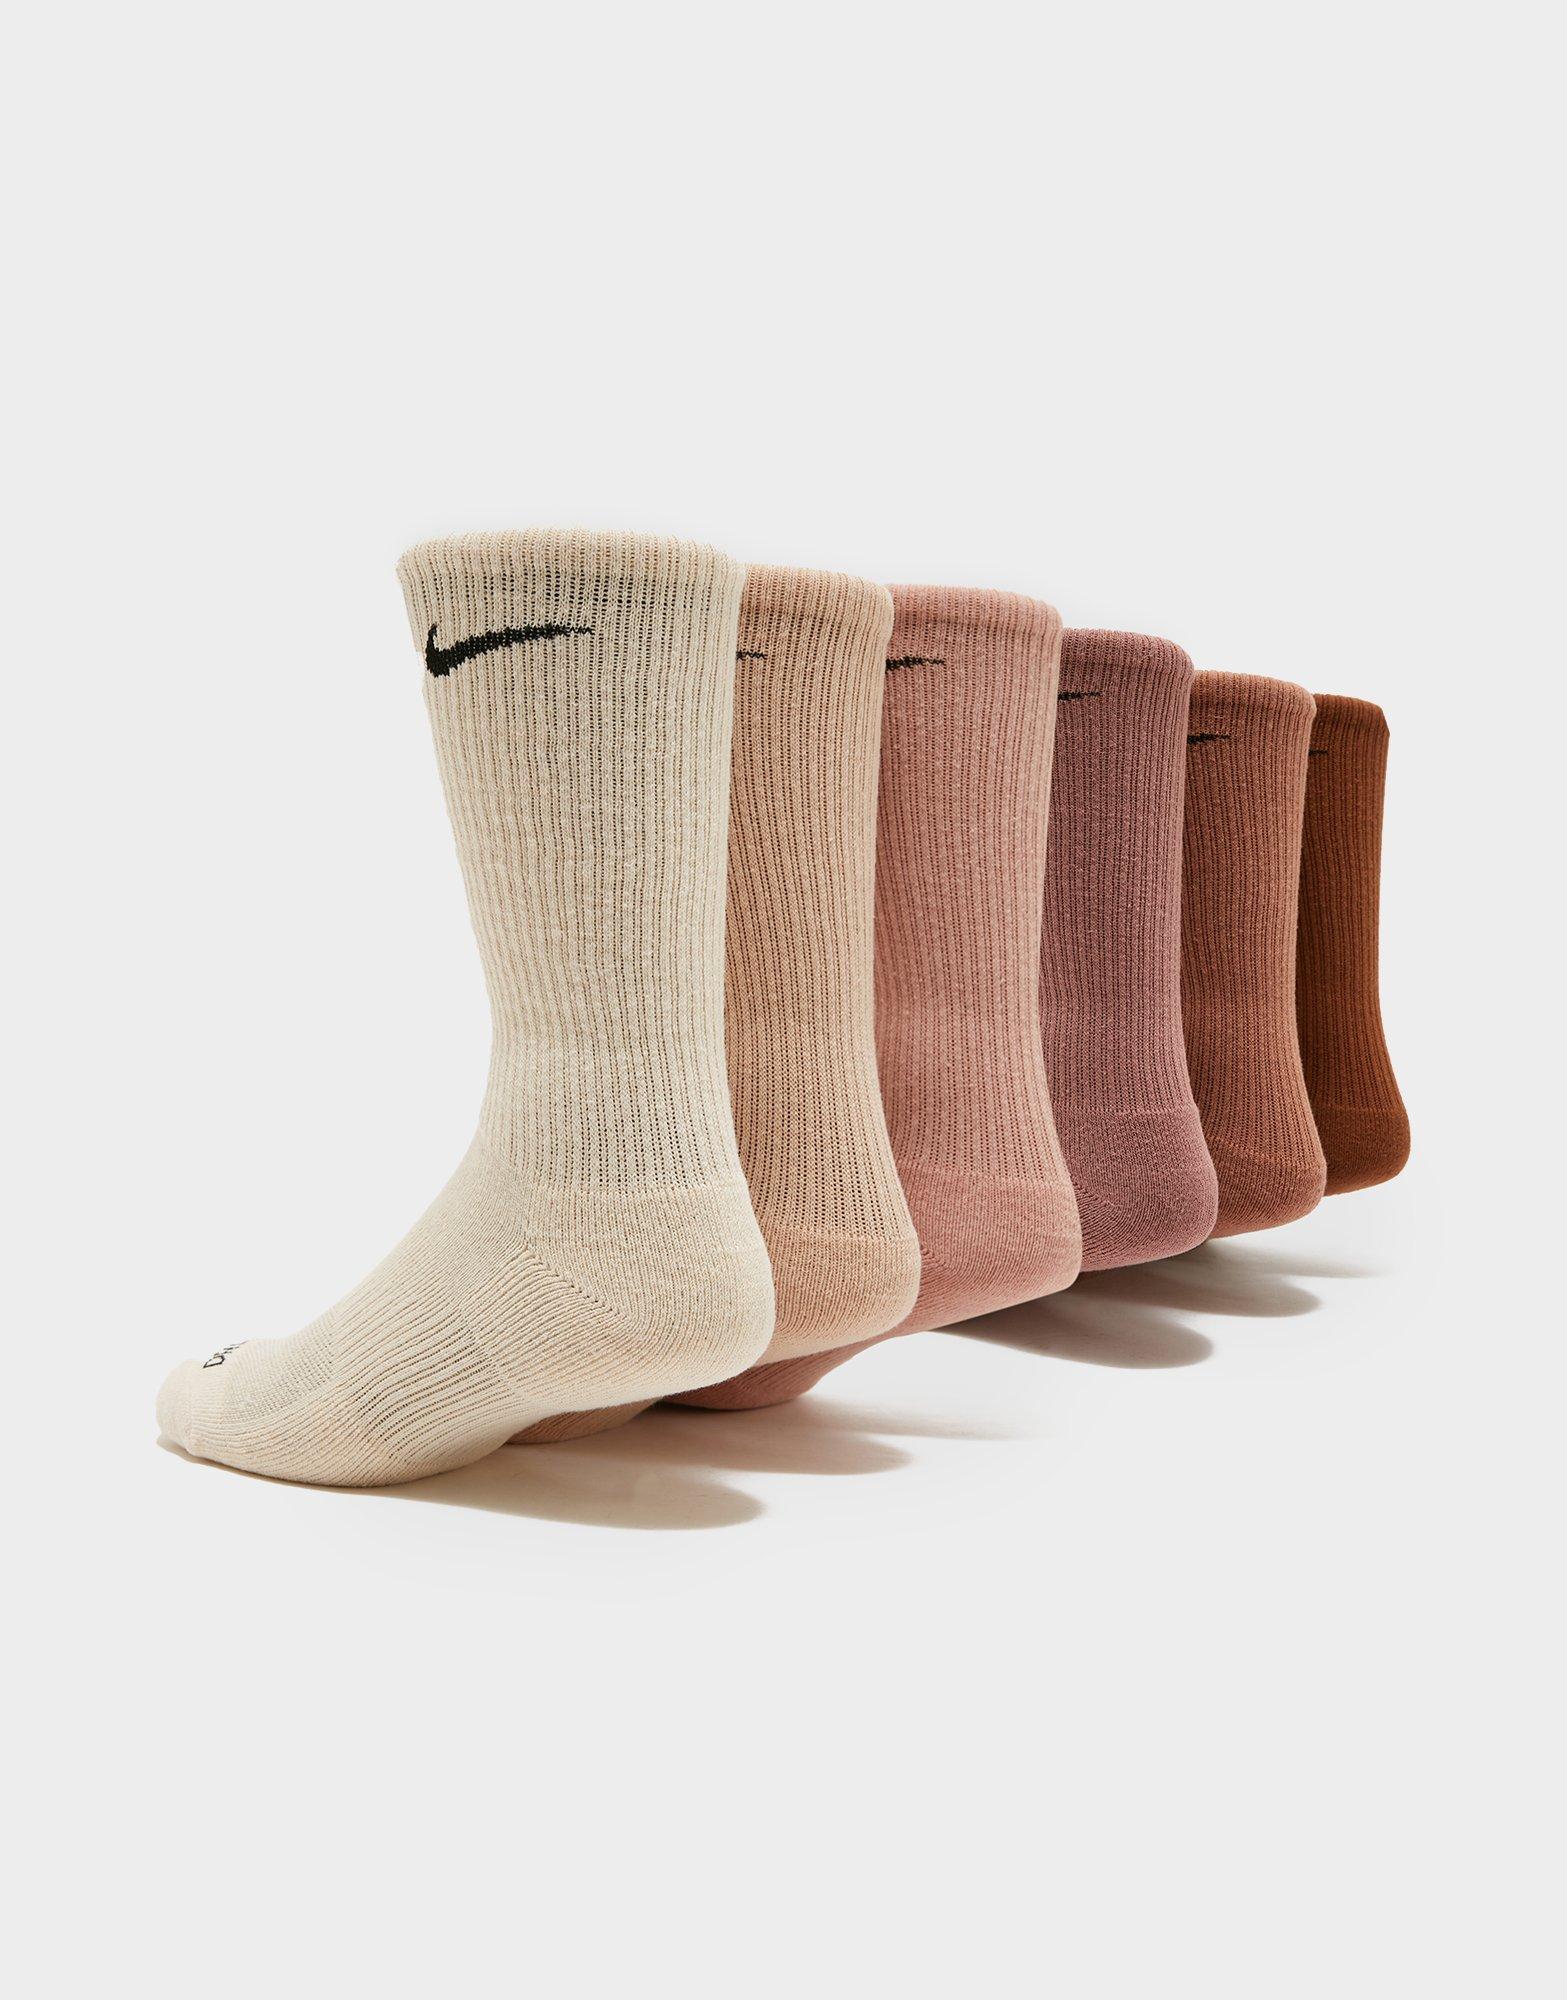 Les chaussettes Everyday Plus Emballage de 6, Nike